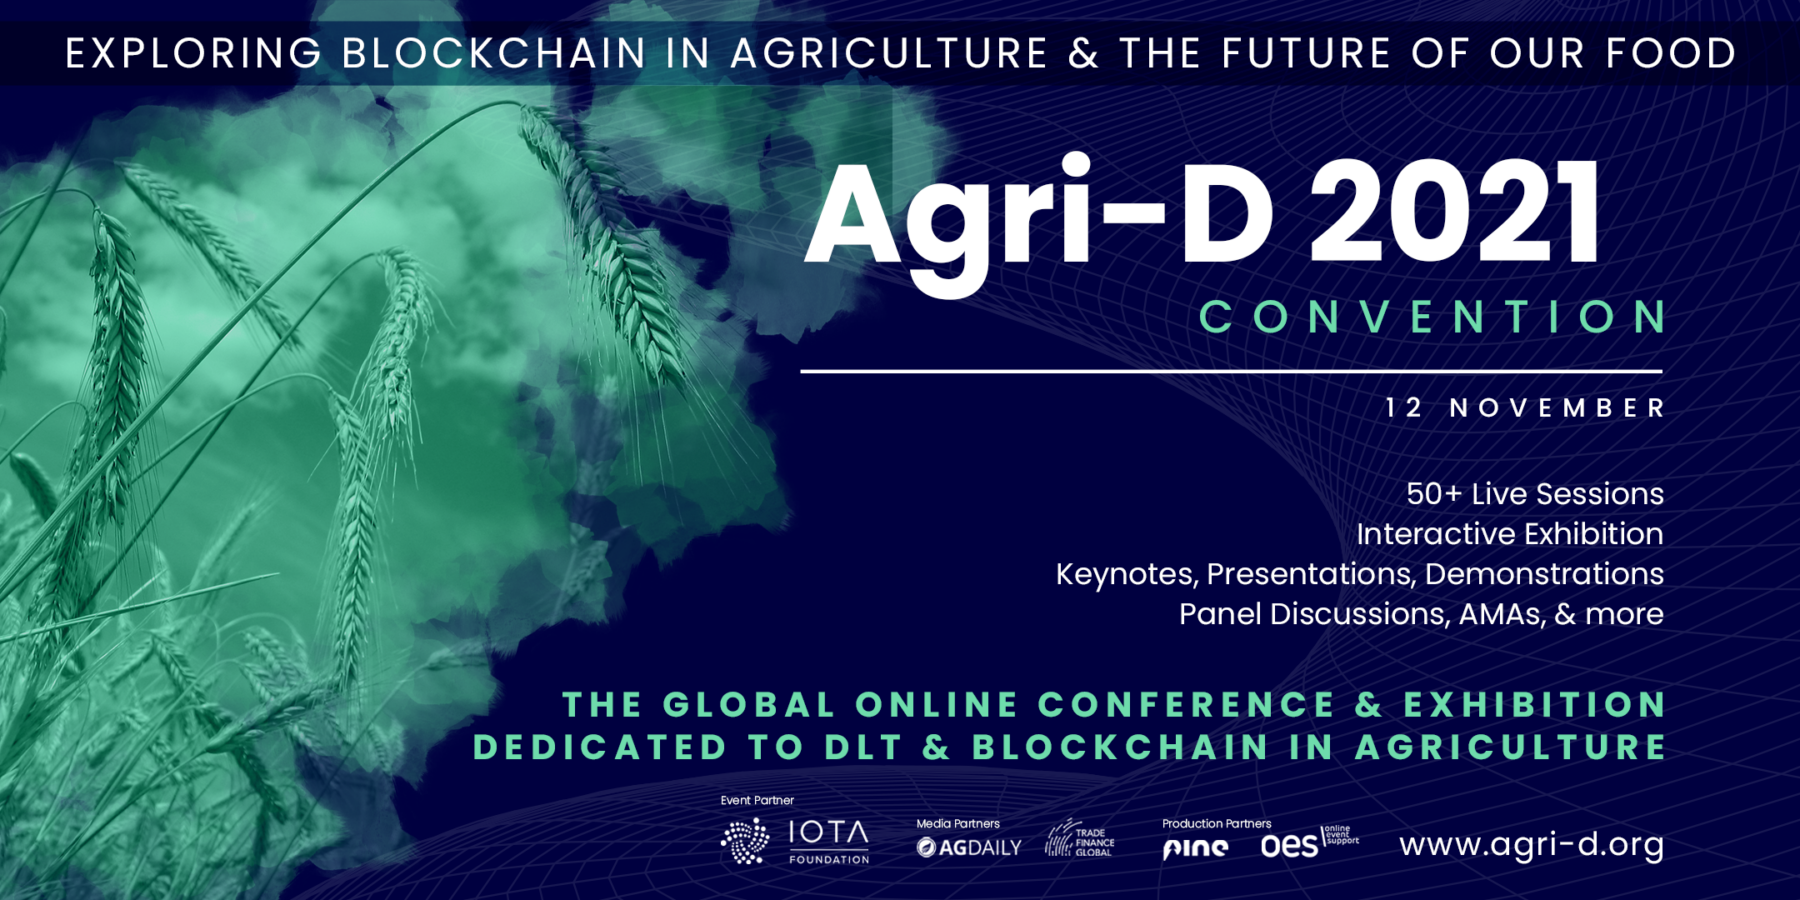 Agri-D 2021 CONVENTION – 12 NOVEMBER 2021